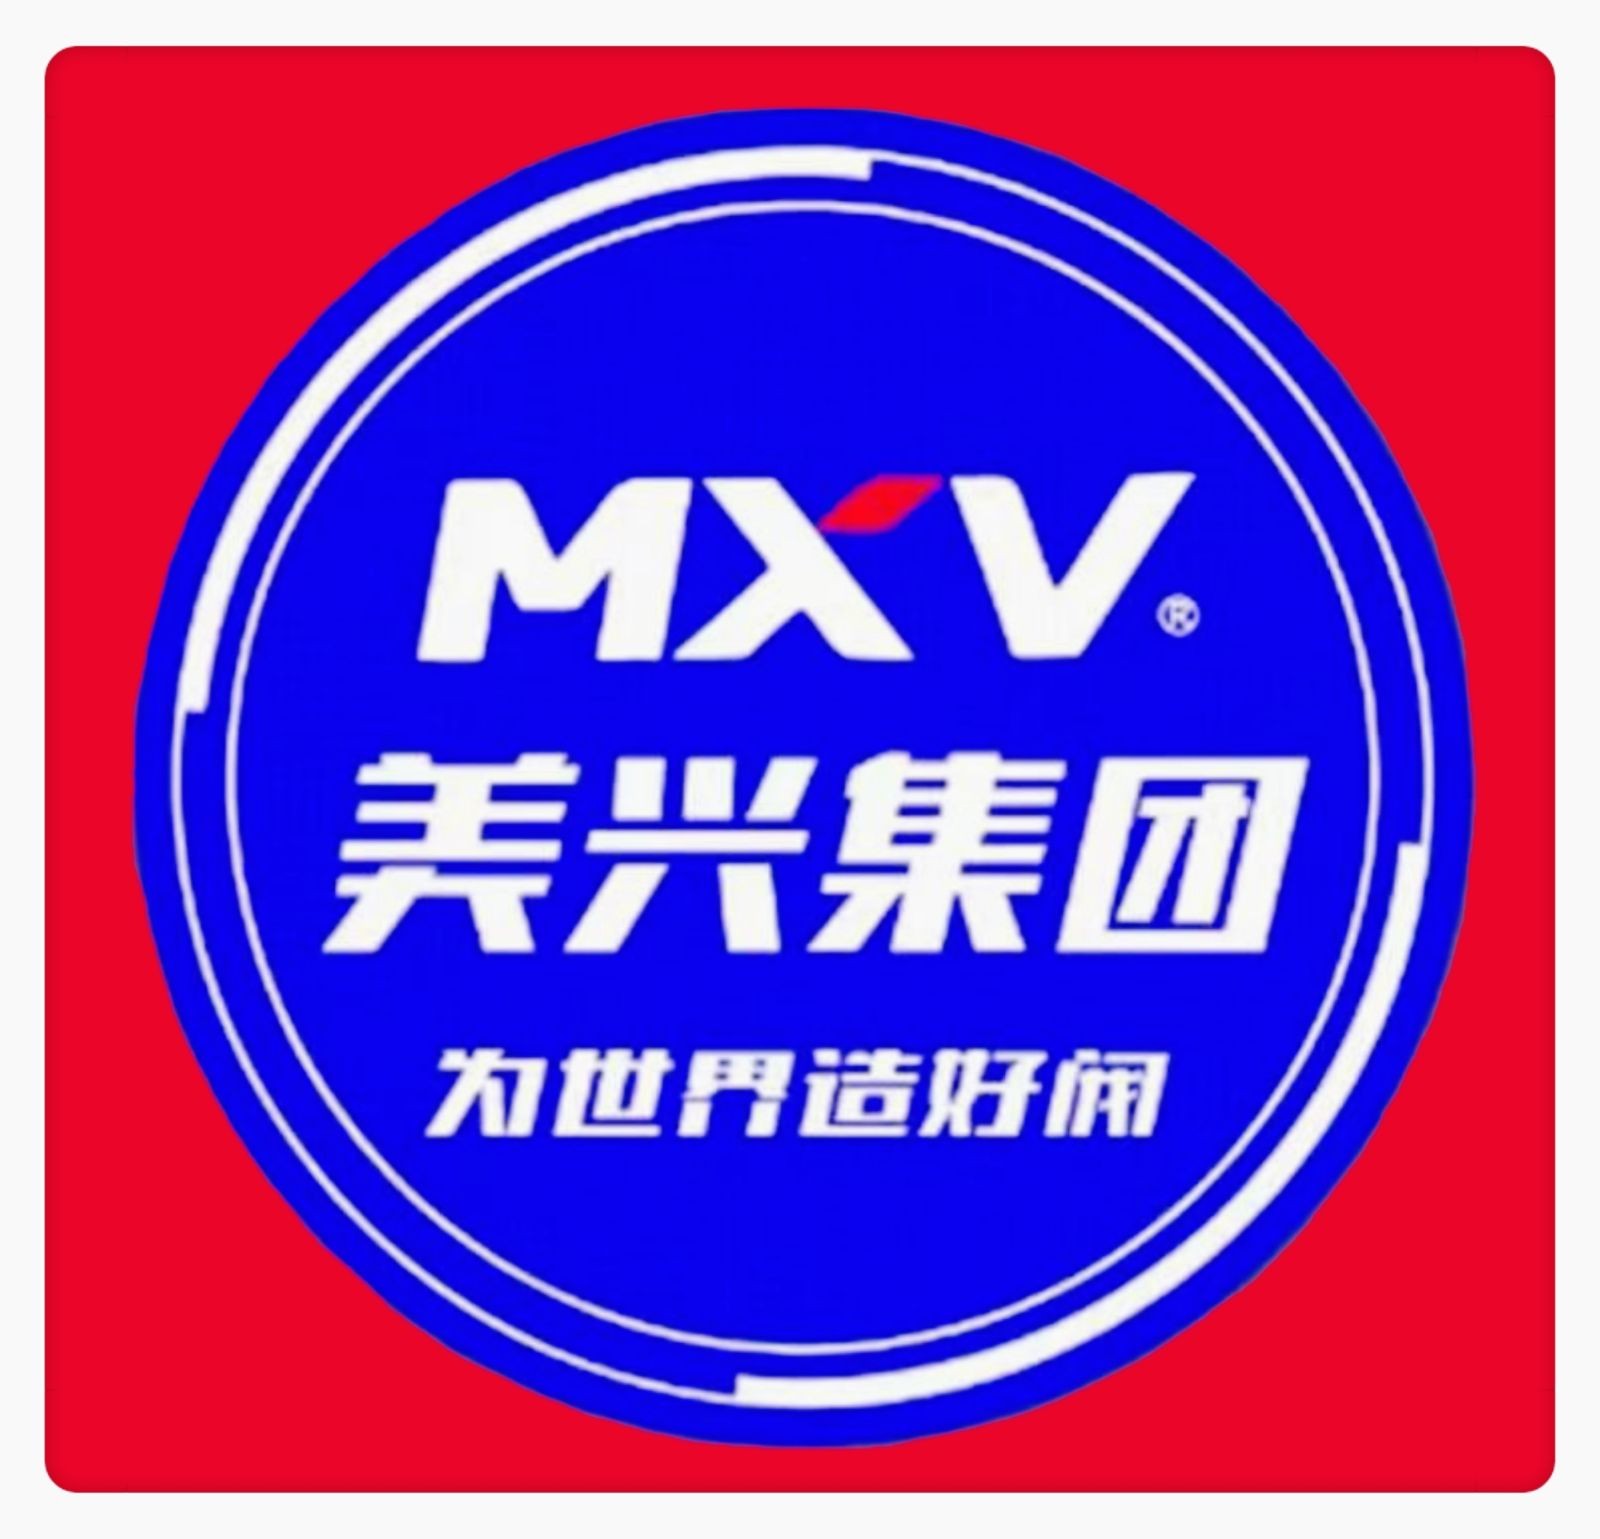 COTV全球直播-中国·美兴集团股份有限公司，专业研发生产销售“MXV美兴”品牌的球阀、碟阀、以及特大型阀门等系列产品；欢迎大家光临！